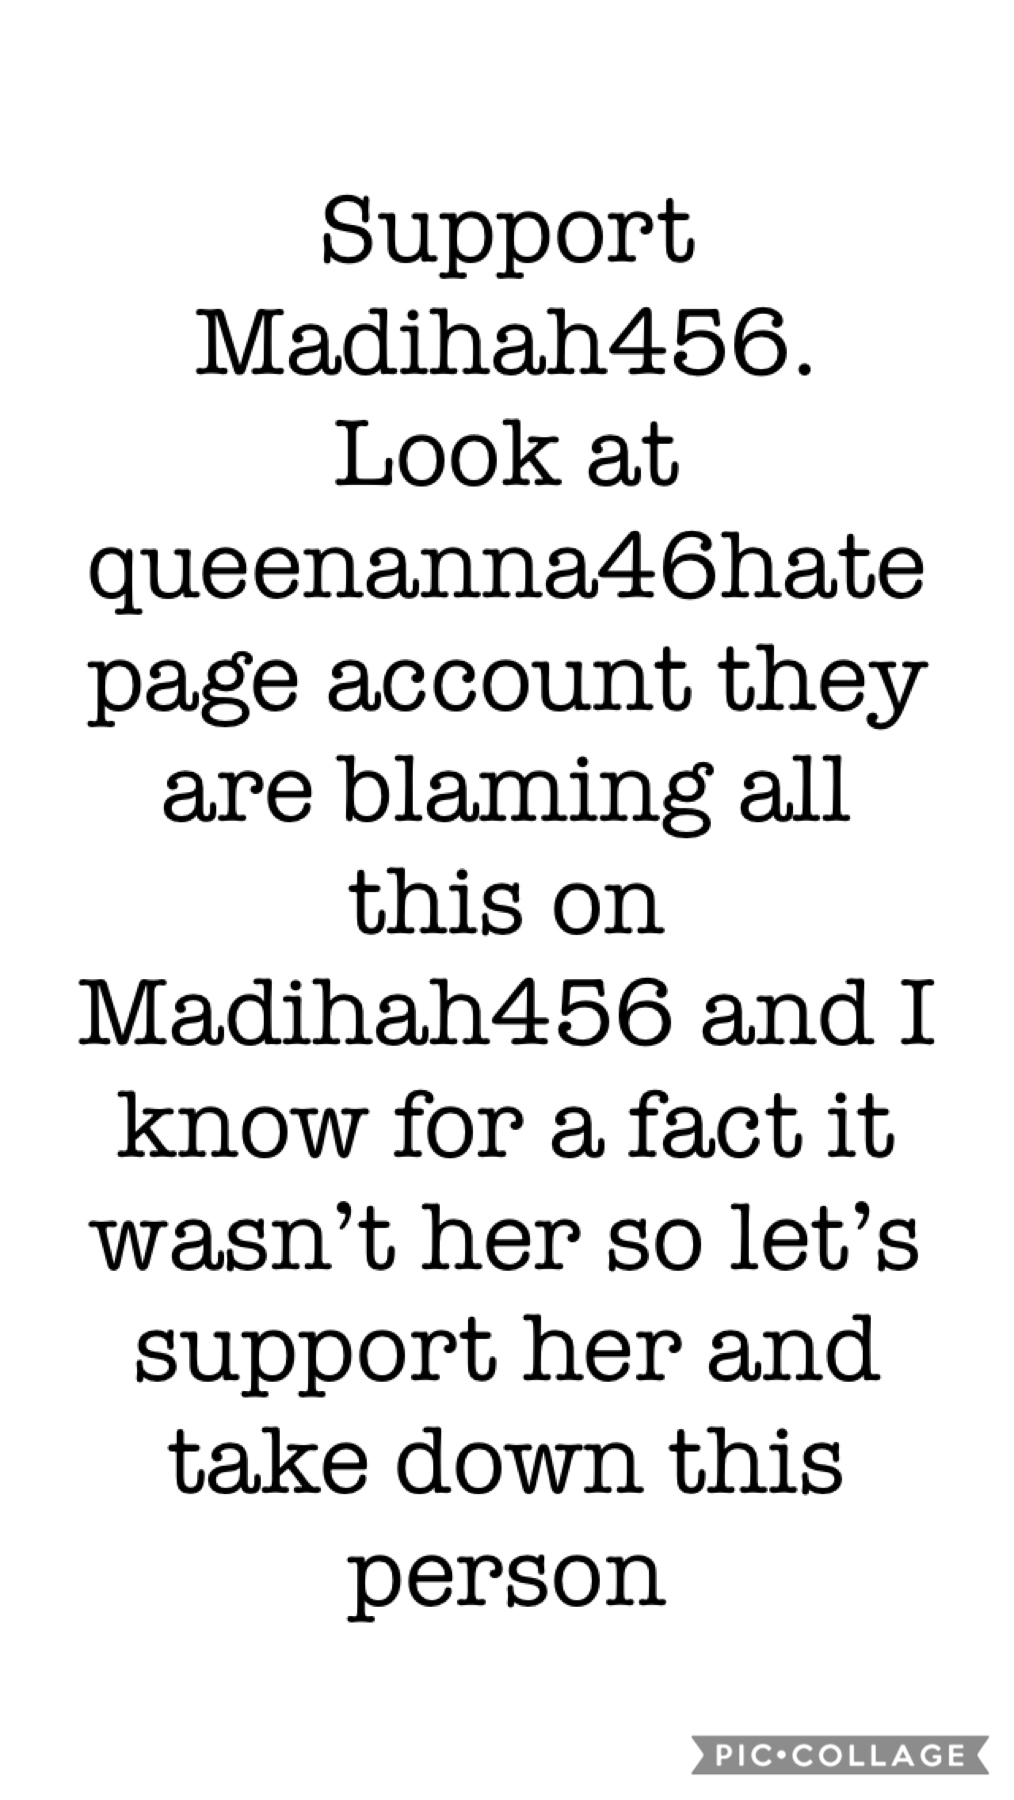 Help Madihah456 